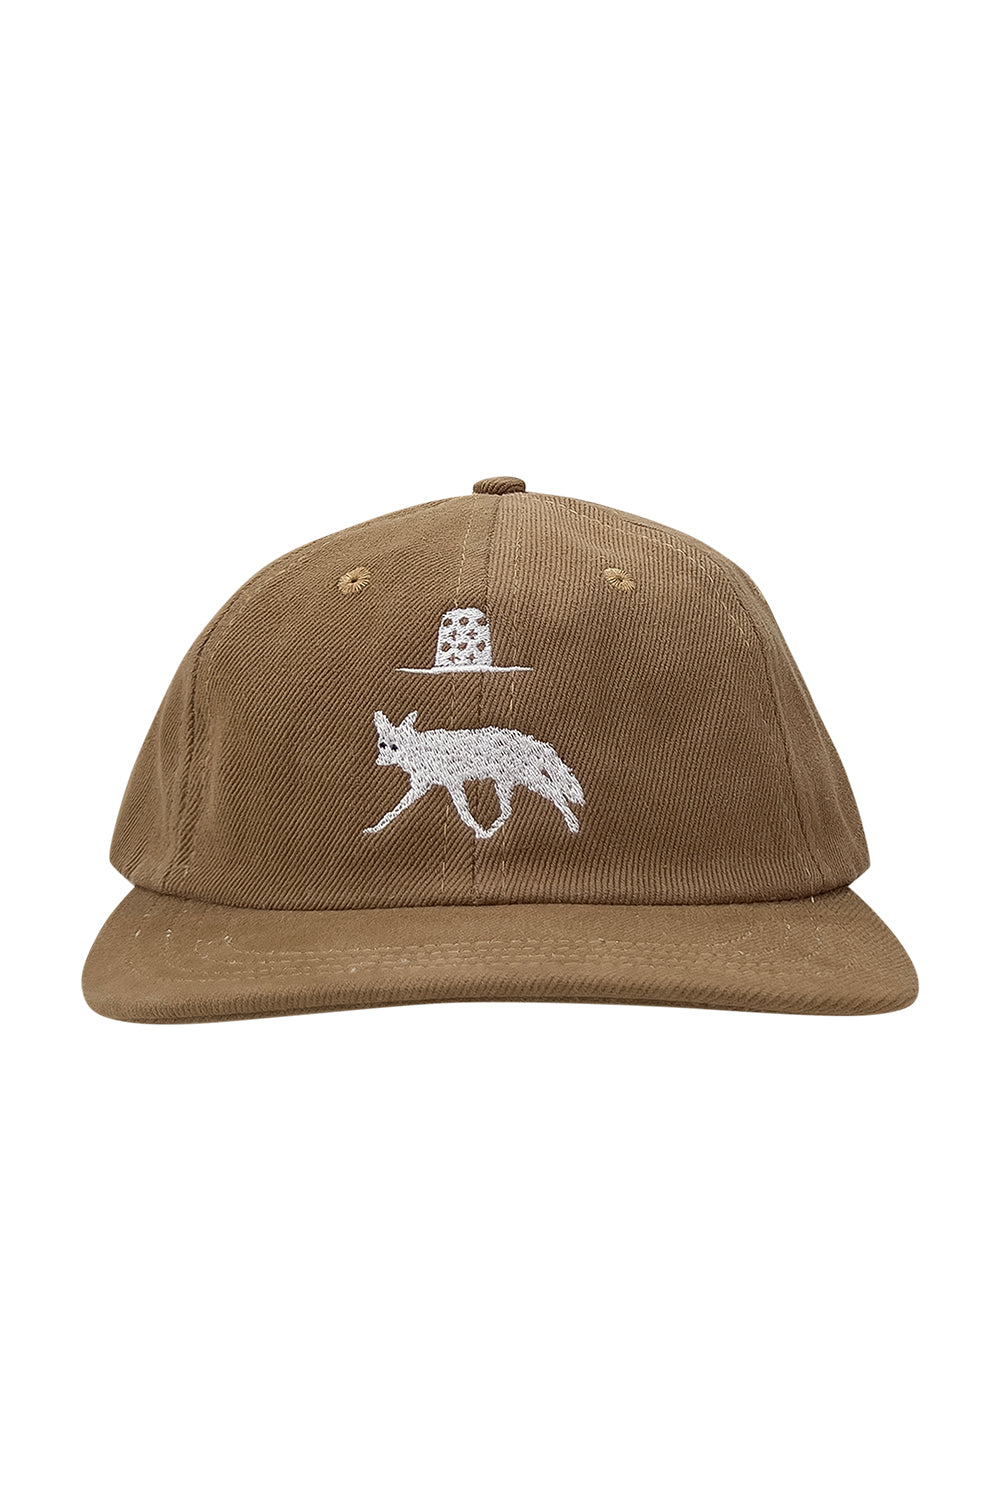 Coyote Twill Cap | Jungmaven Hemp Clothing & Accessories / Color: Coyote 